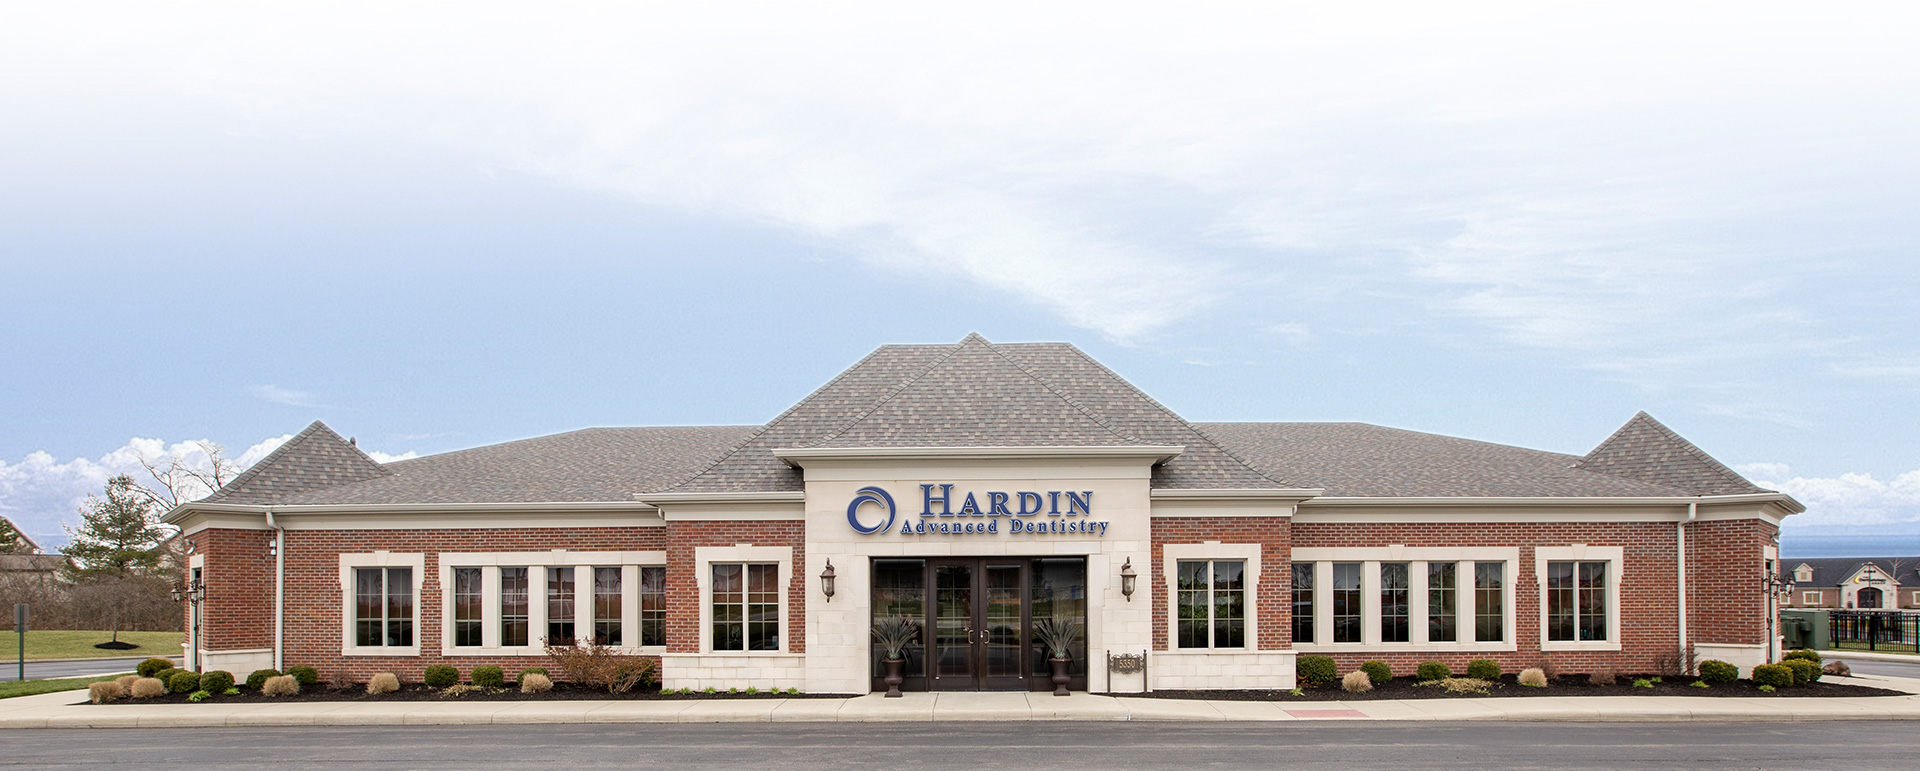 View of Hardin Dental building